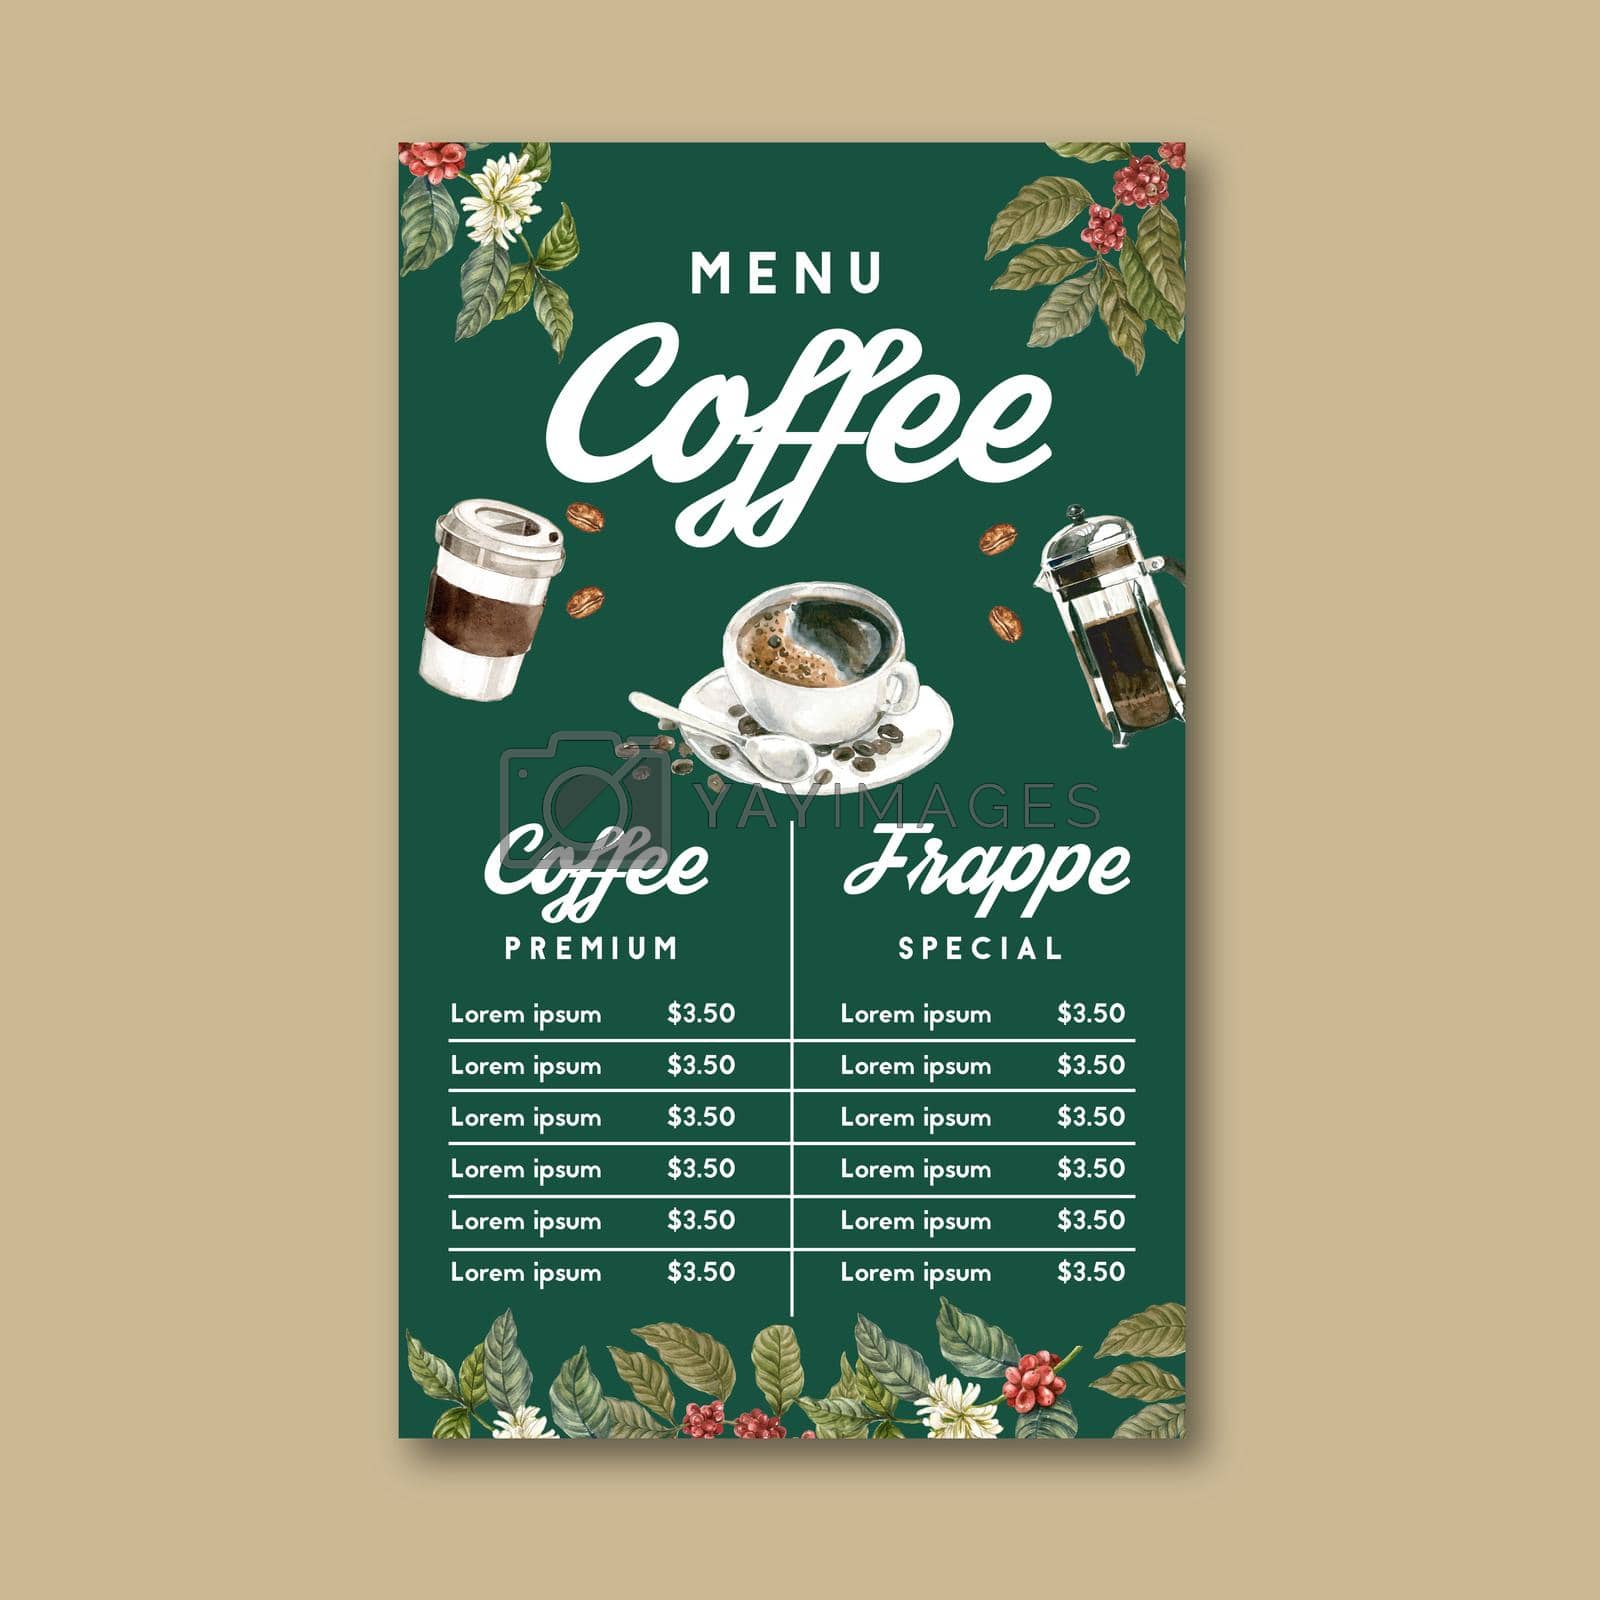 Royalty free image of coffee house menu americano, cappuccino, espresso menu, infographic design, watercolor illustration by Photographeeasia